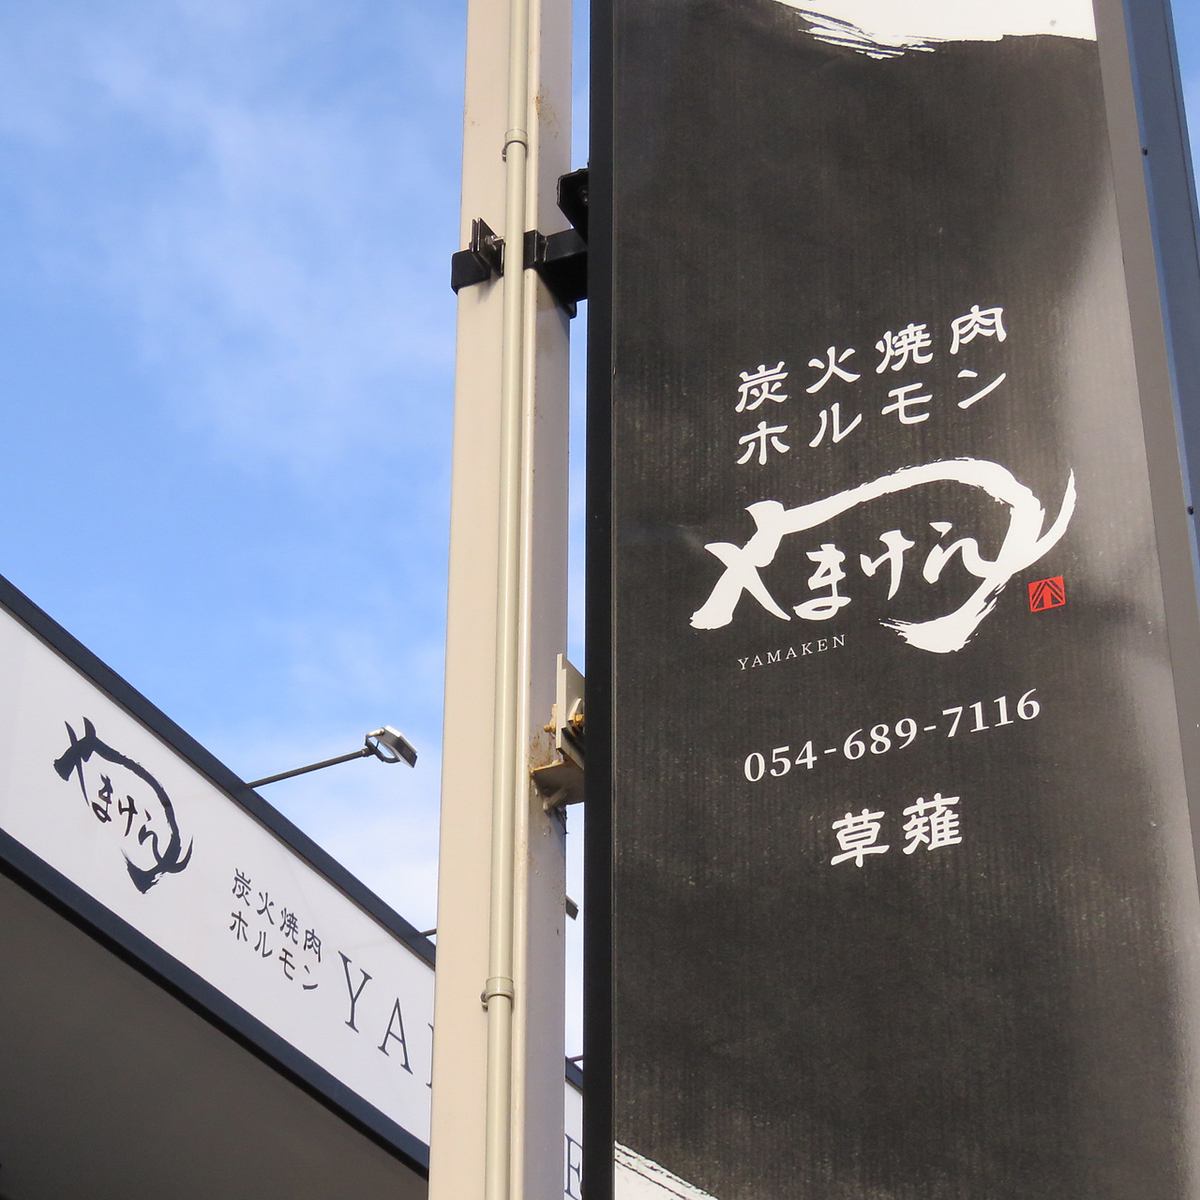 Popular store Yamaken is NEW OPEN in Kusanagi !!